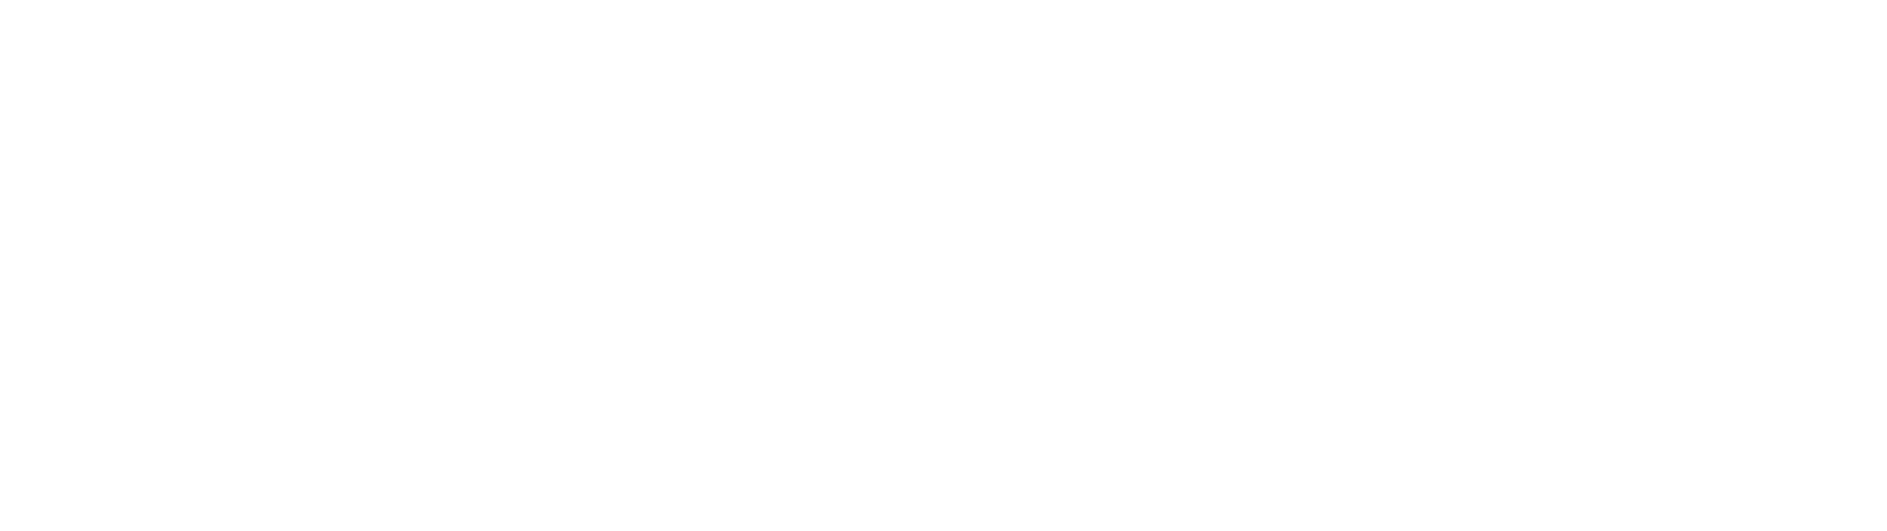 Black and White No Brand Logo - Becks Logos For Print Or Interactive | Beck's Hybrids Multimedia